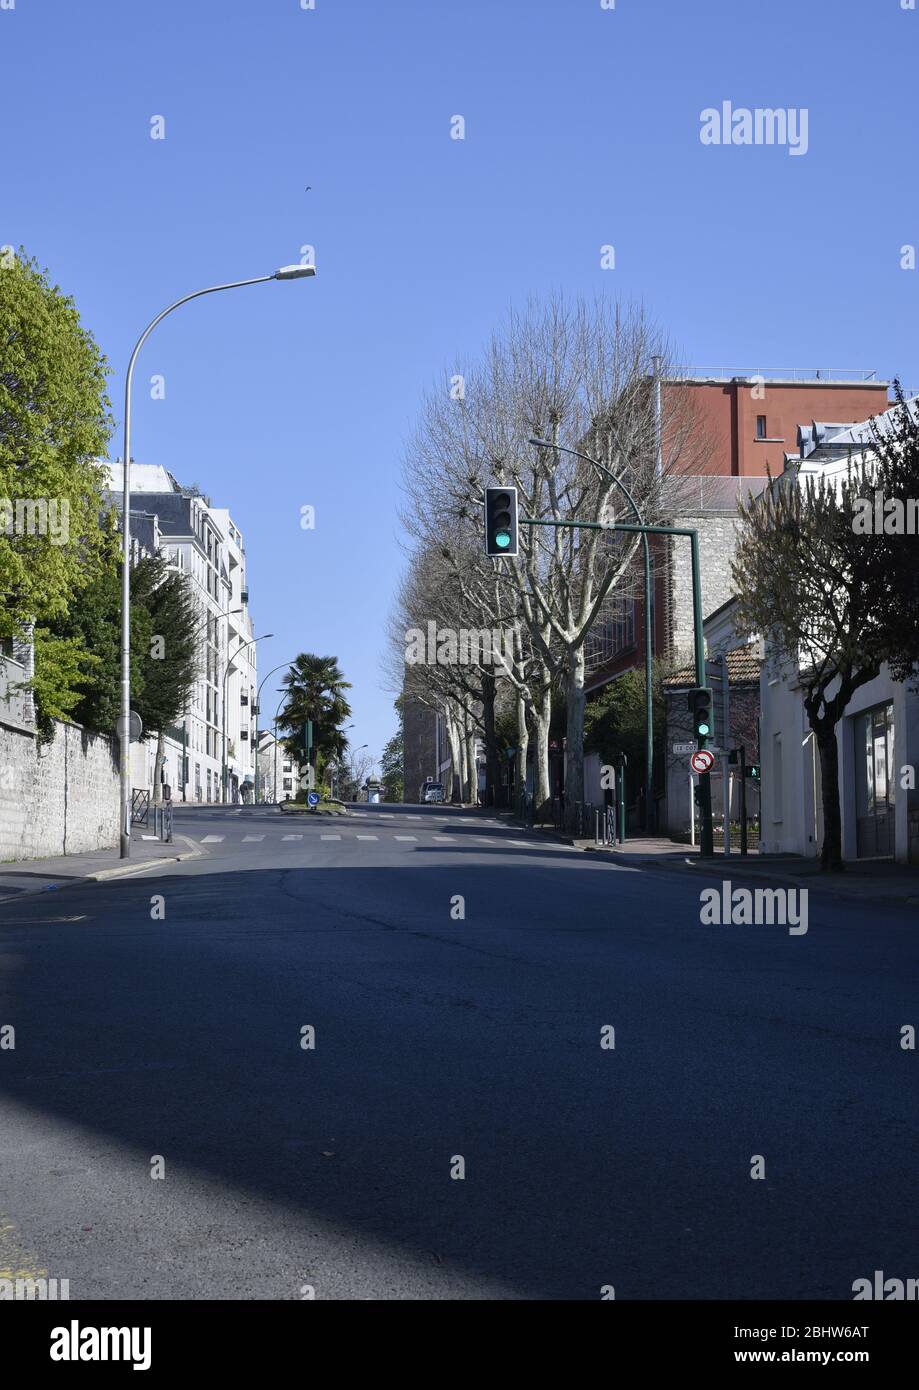 Leere Straße während des Pendels Stockfoto